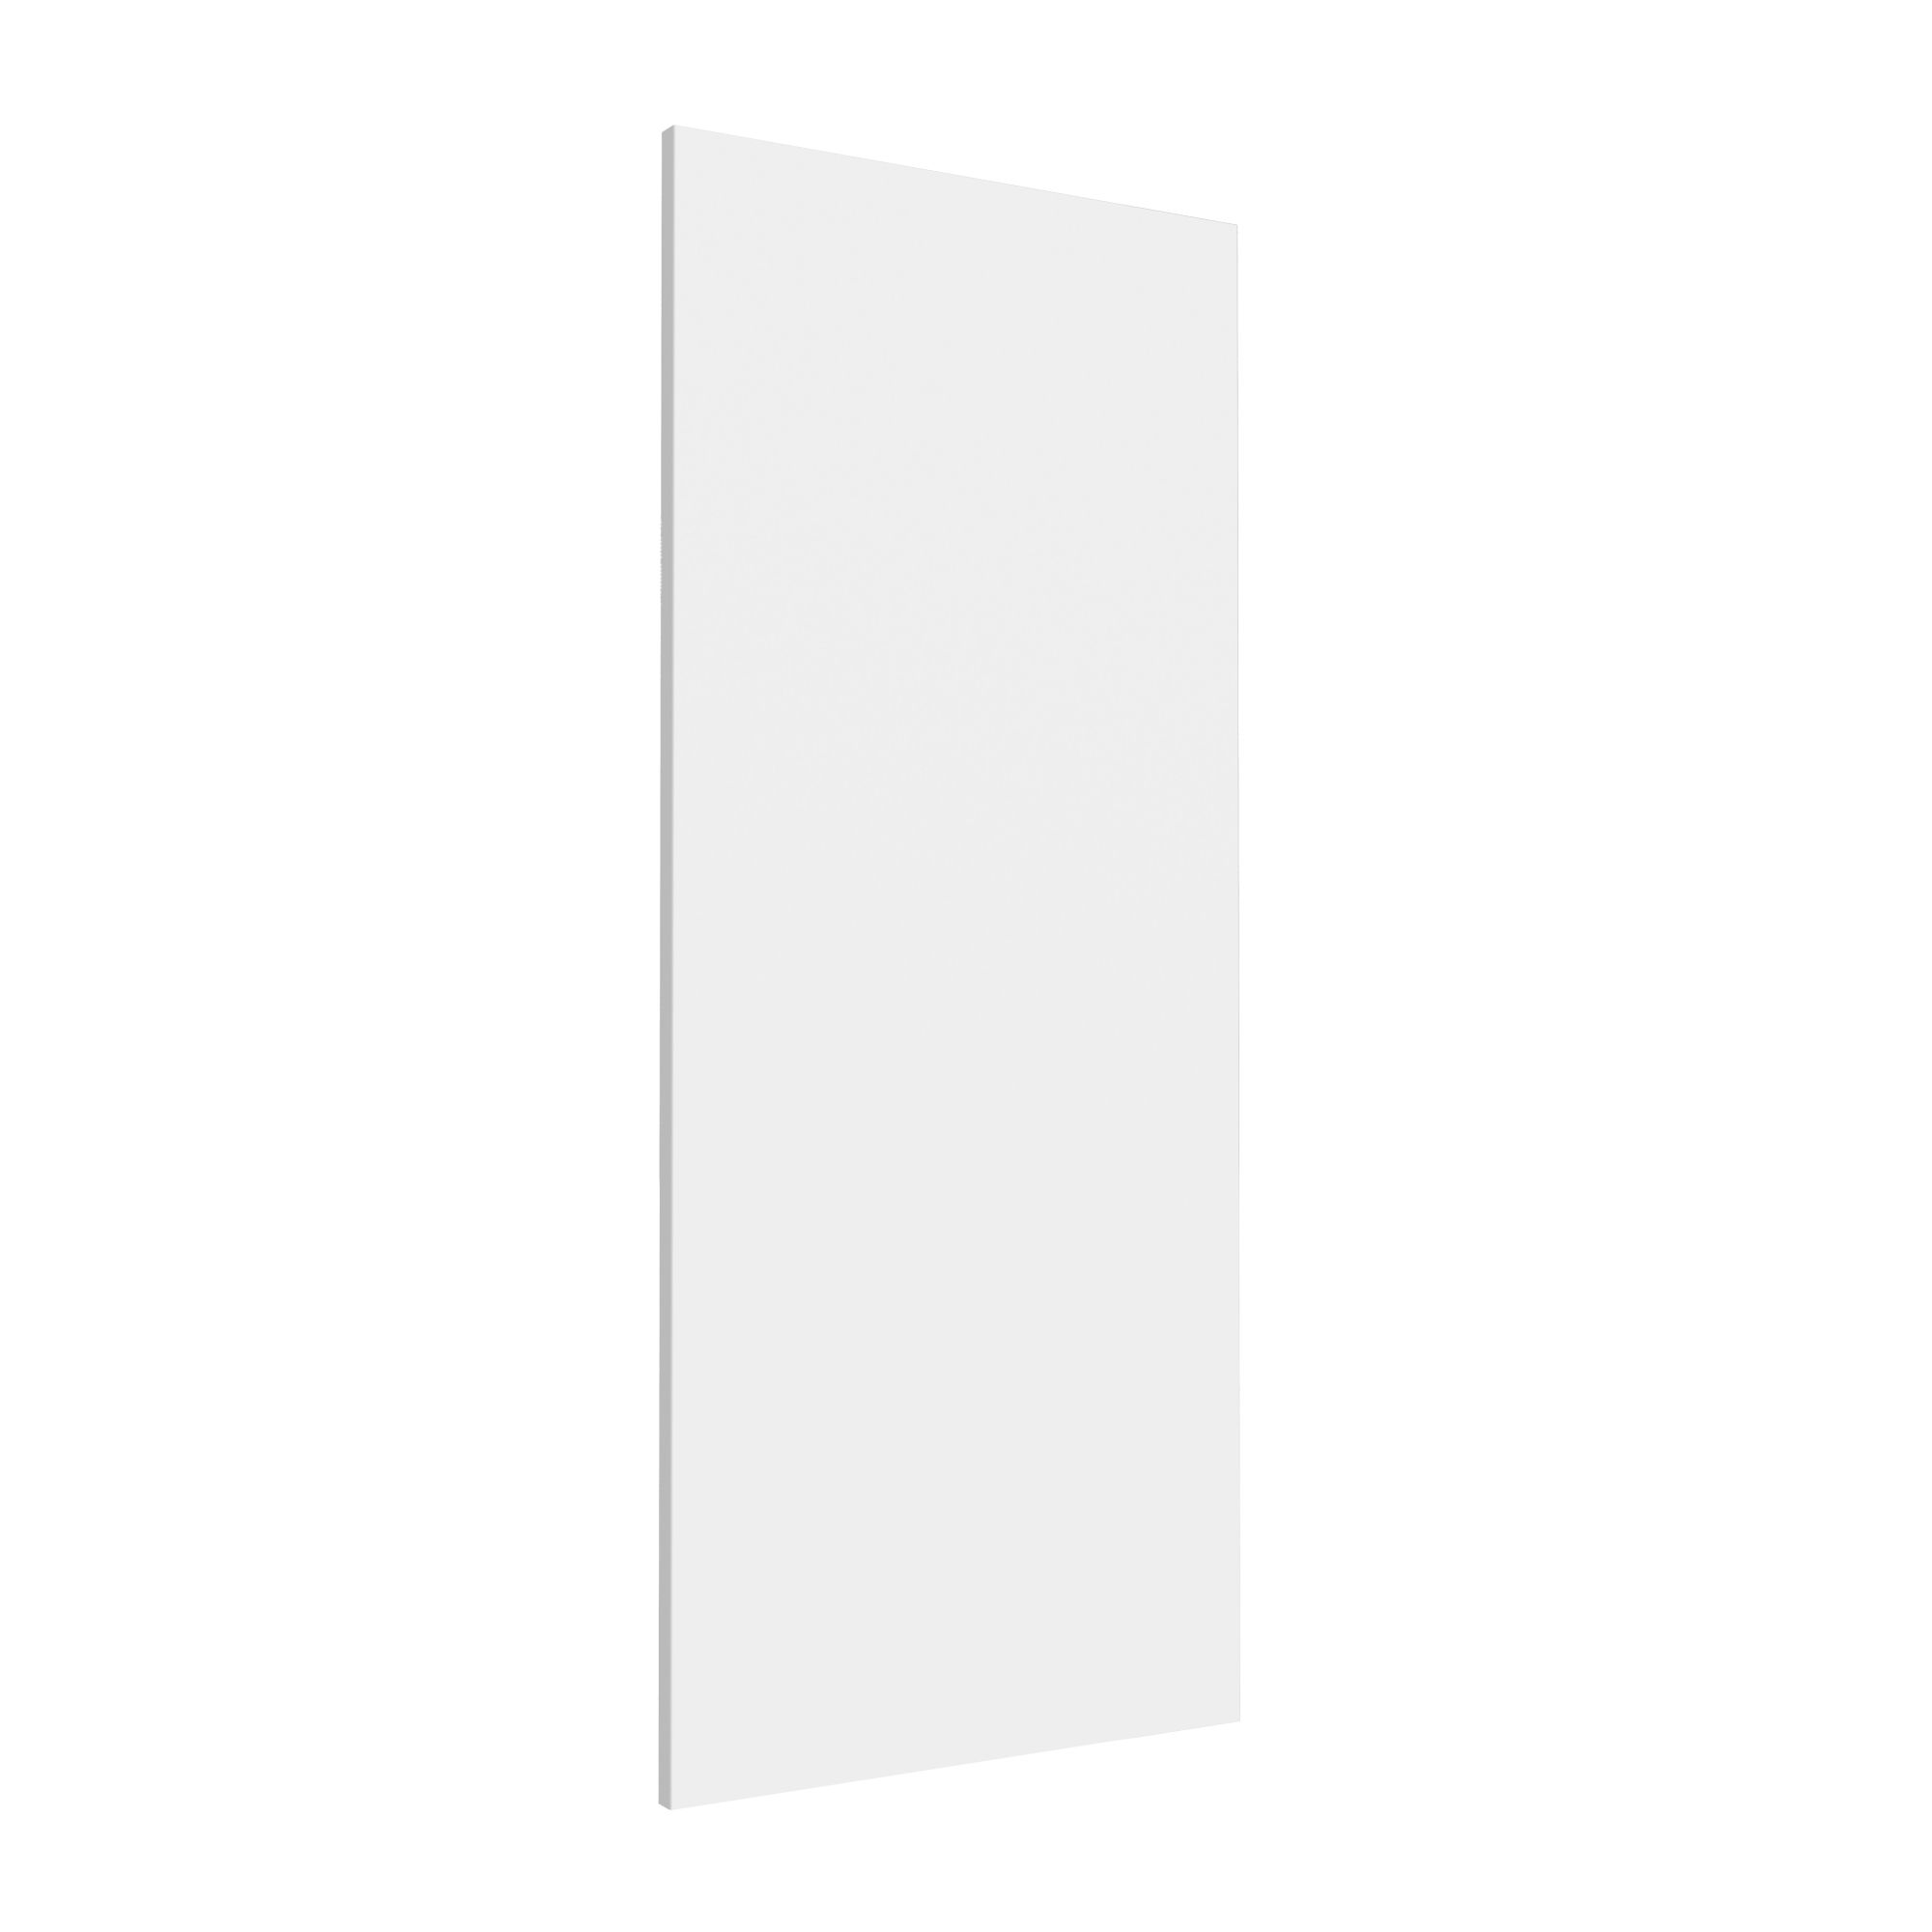 Form Darwin Matt white Chipboard Cabinet door (H)958mm (W)372mm